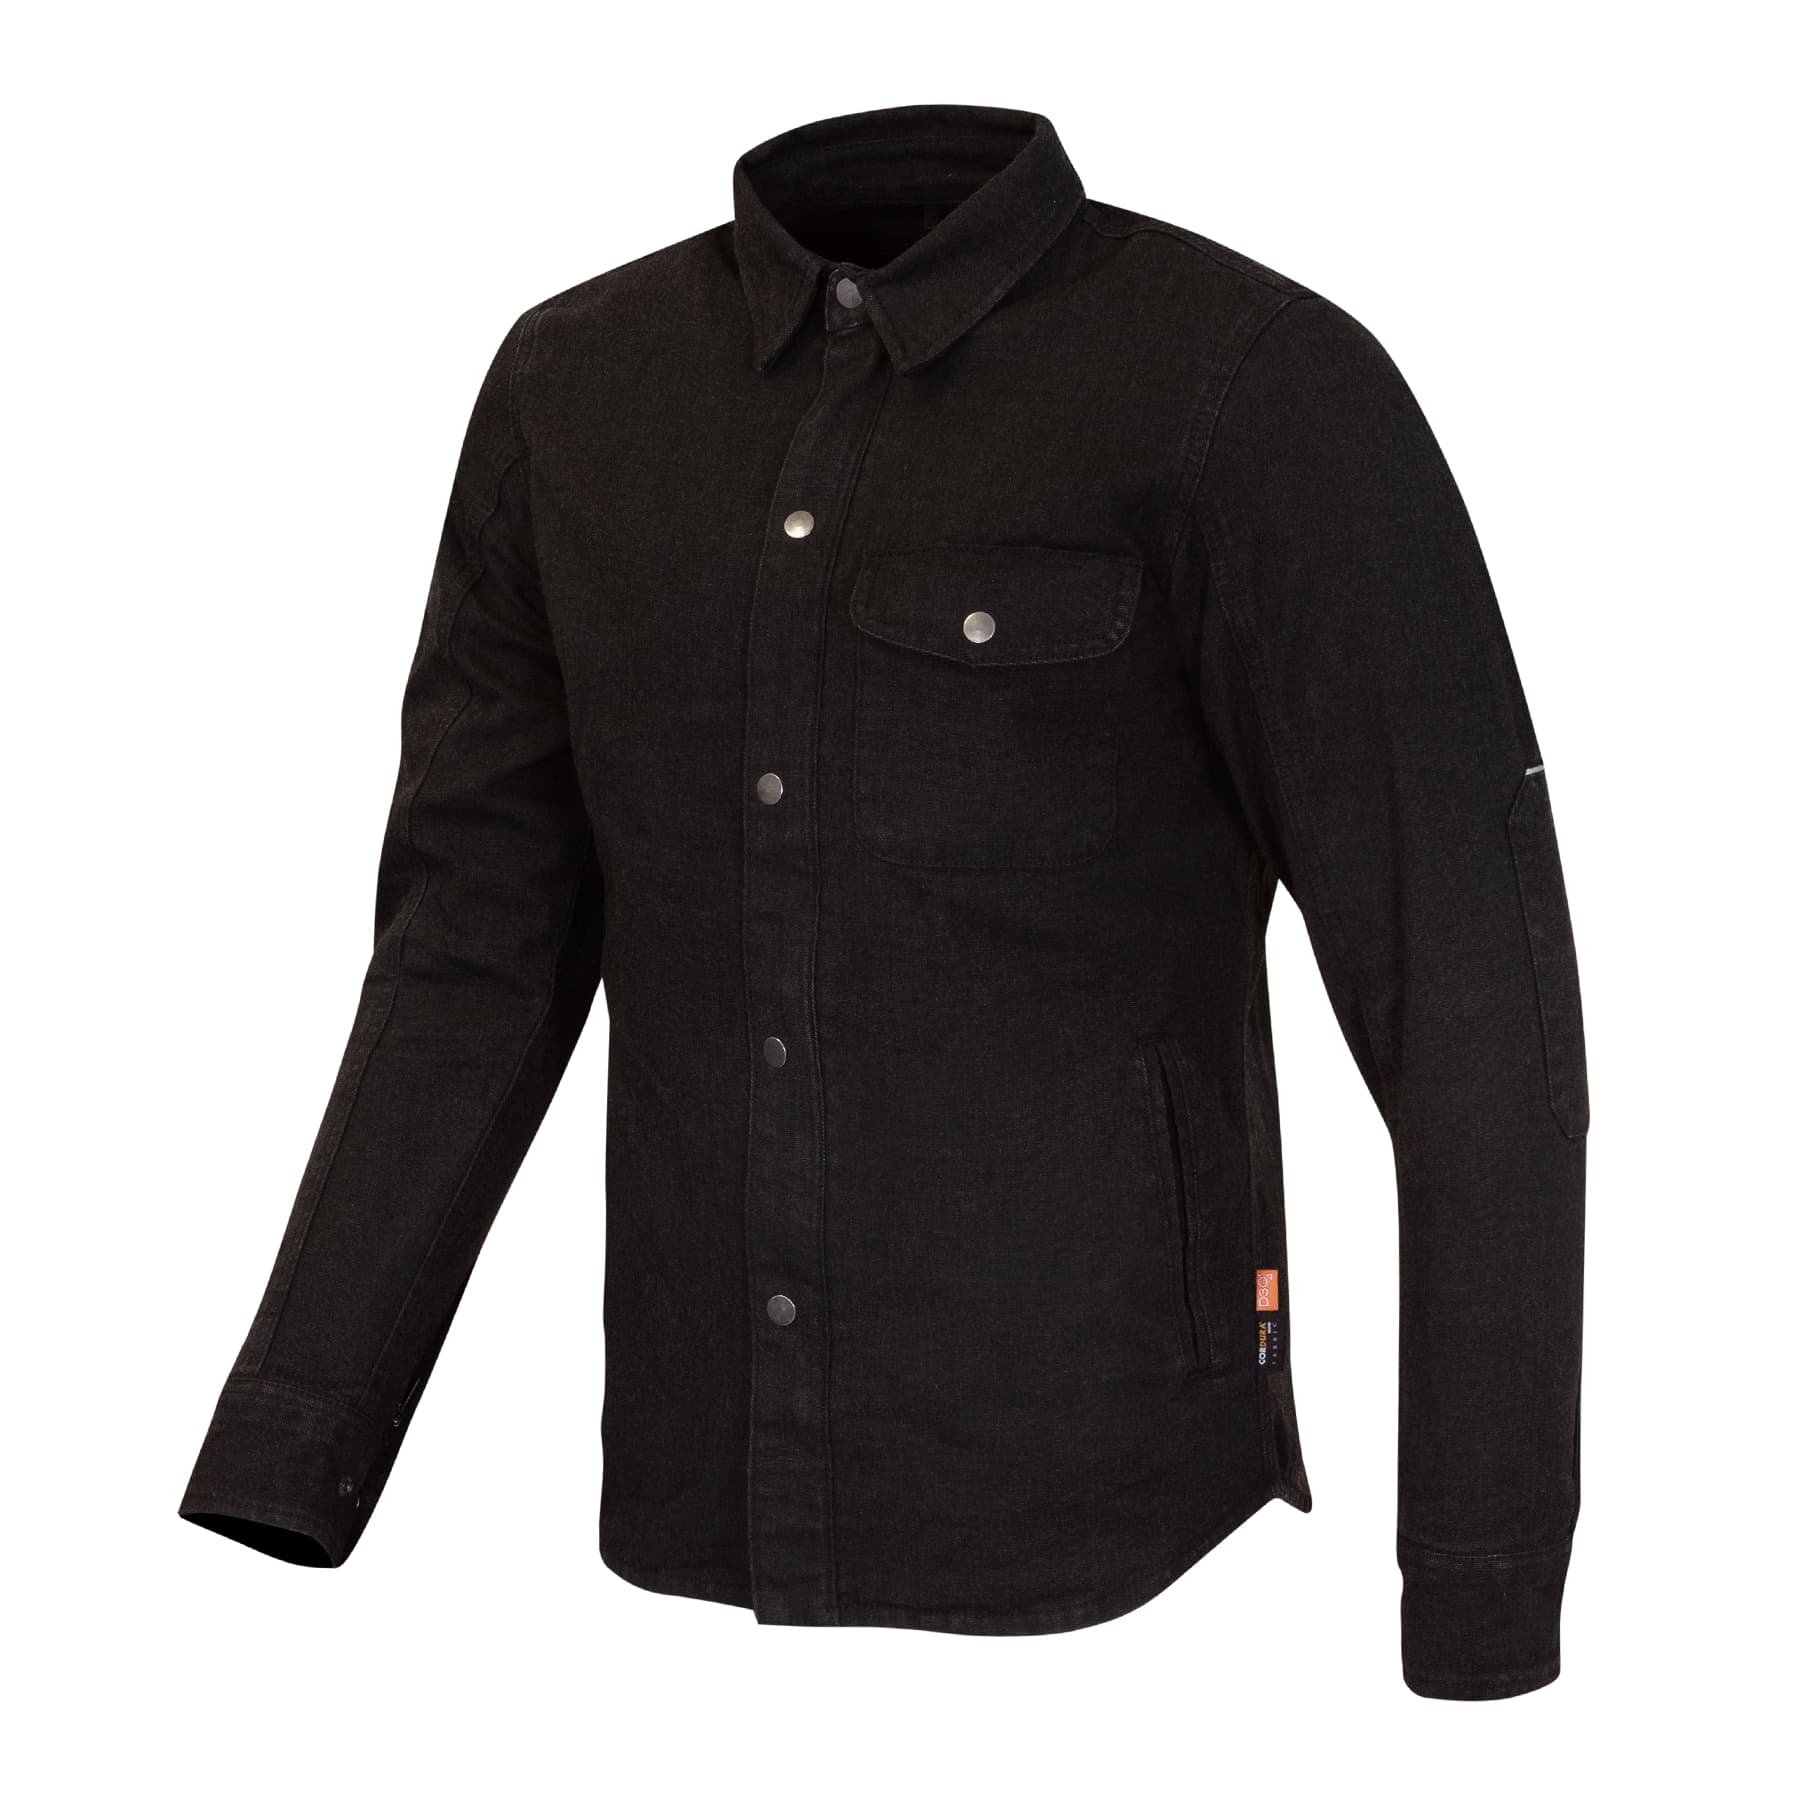 Image of Merlin Porta shirt in black